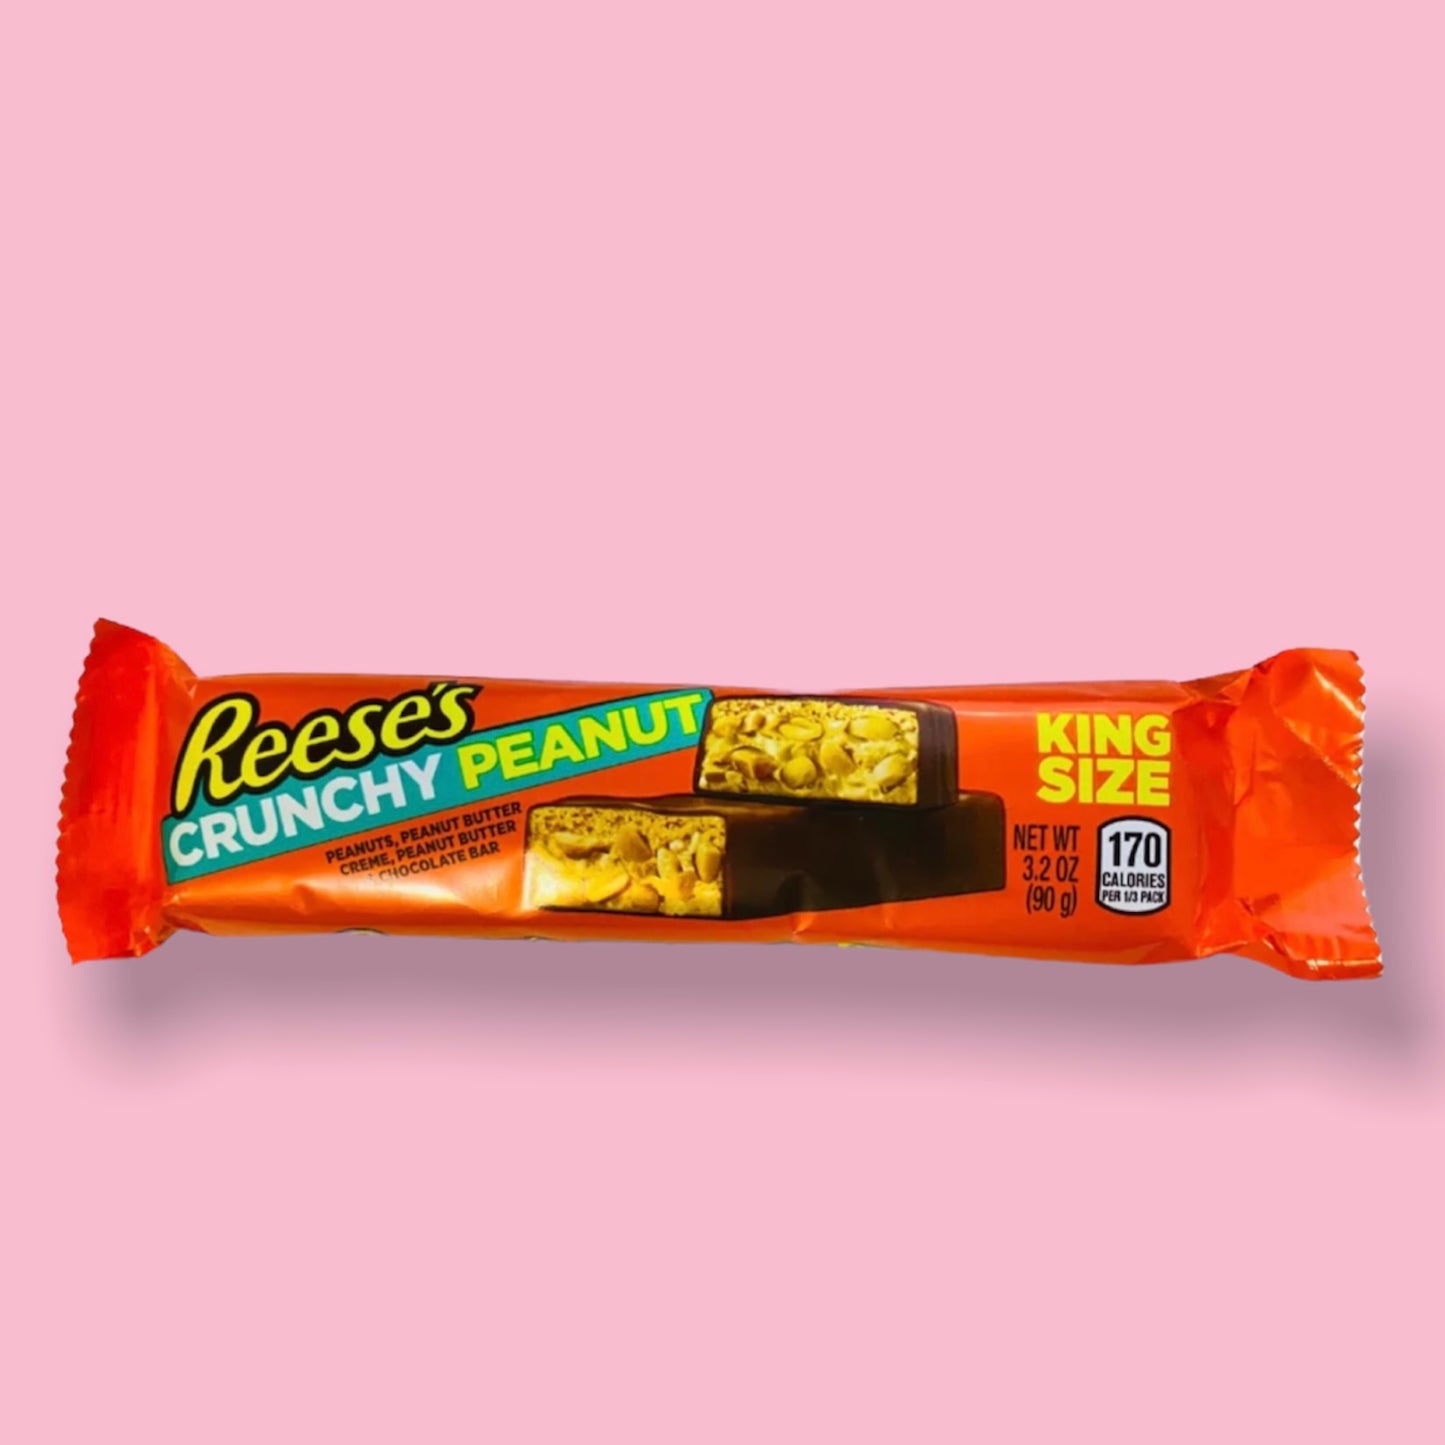 Reese’s Crunchy Peanut Bar - King Size